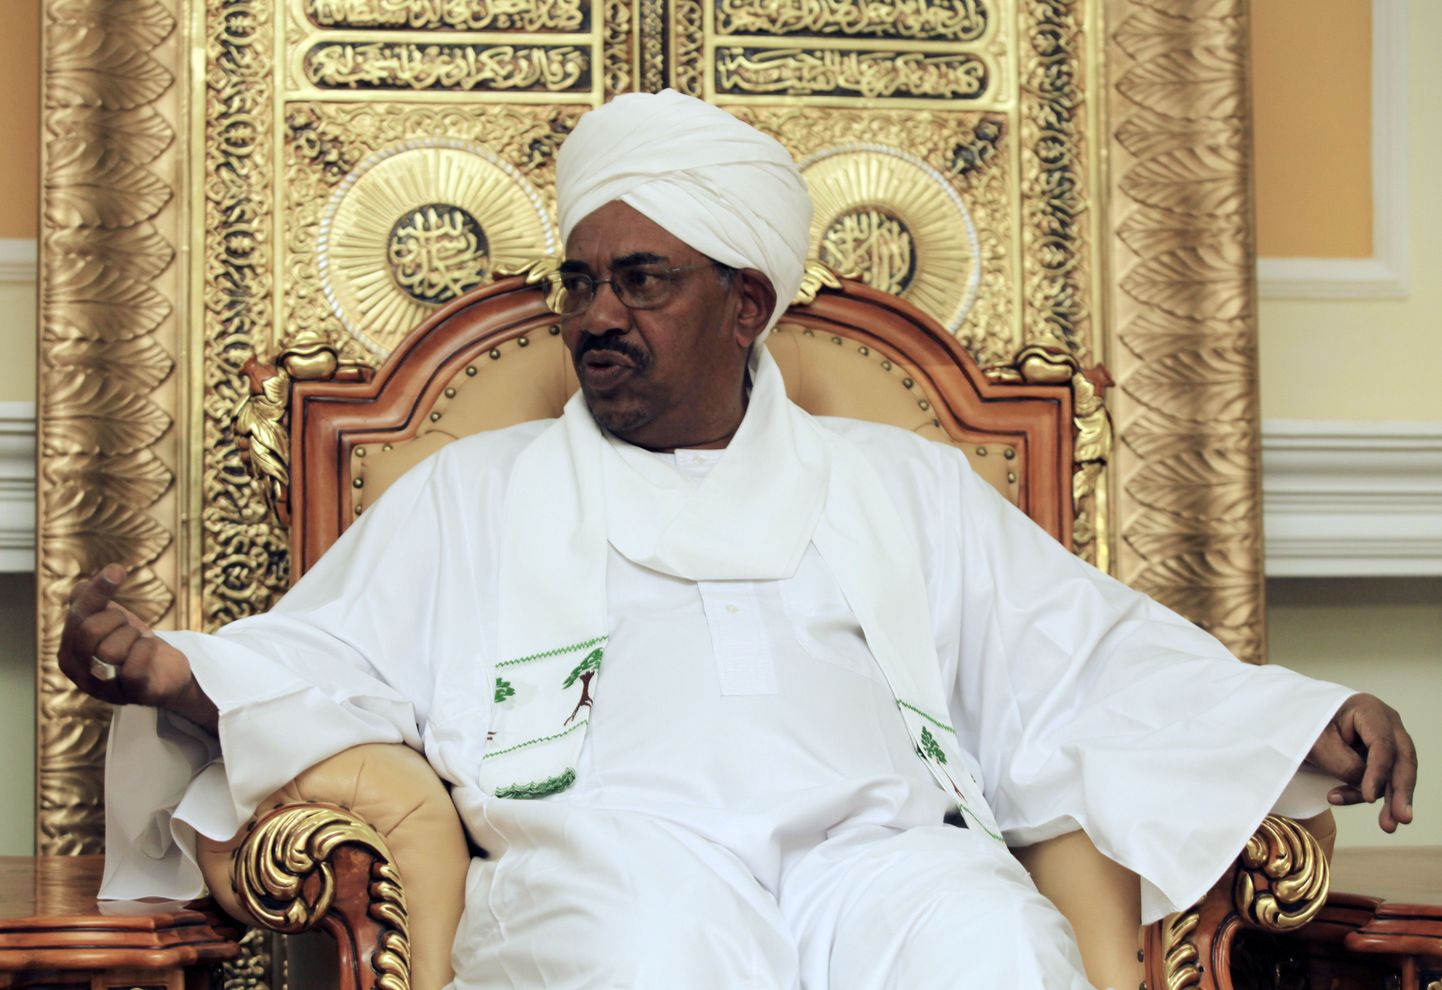 Sudaani president Omar Hassan al-Bashir